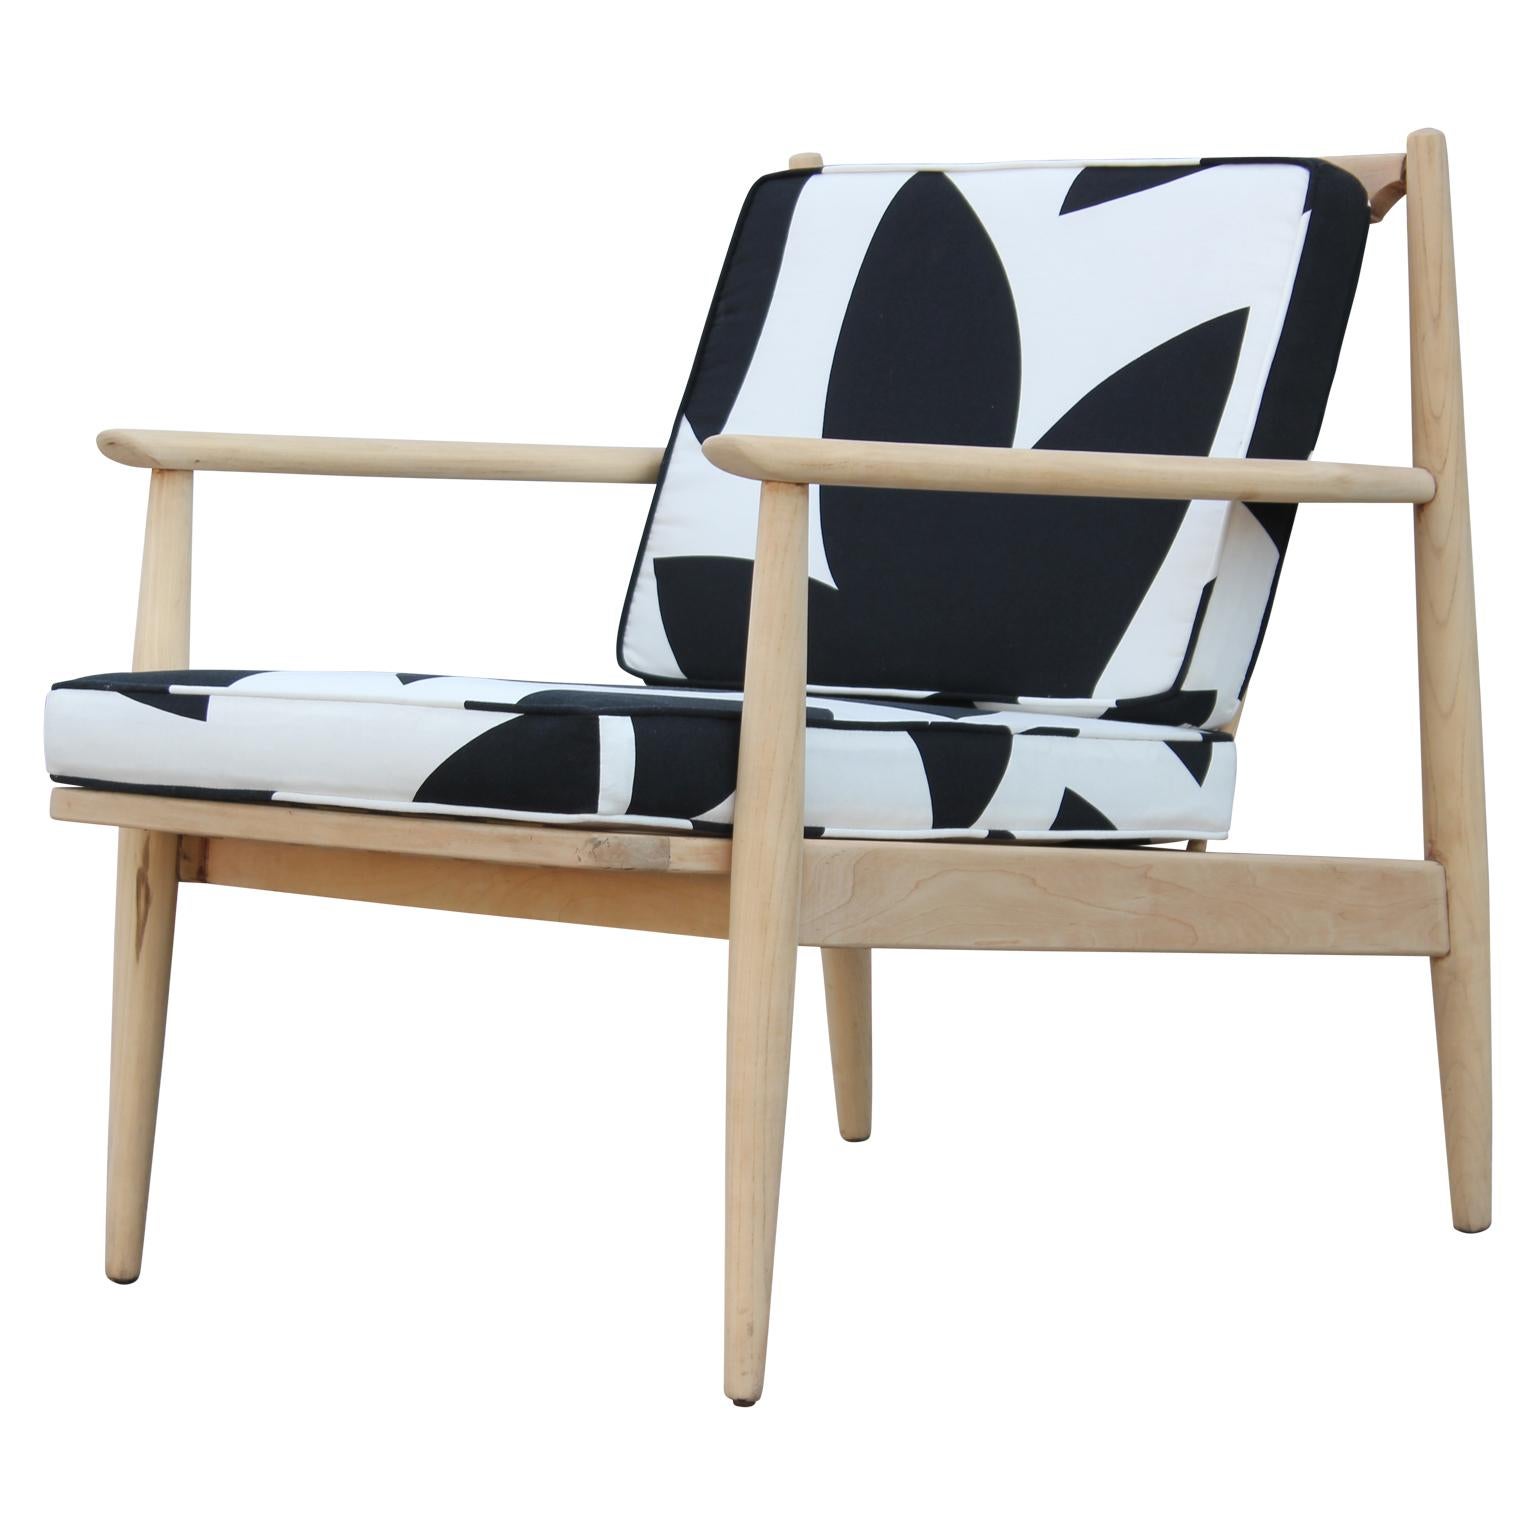 A beautiful modern Danish style lounge chair featuring a playful geometric black and white pattern fabric and a custom light walnut finish. By Baumritter.